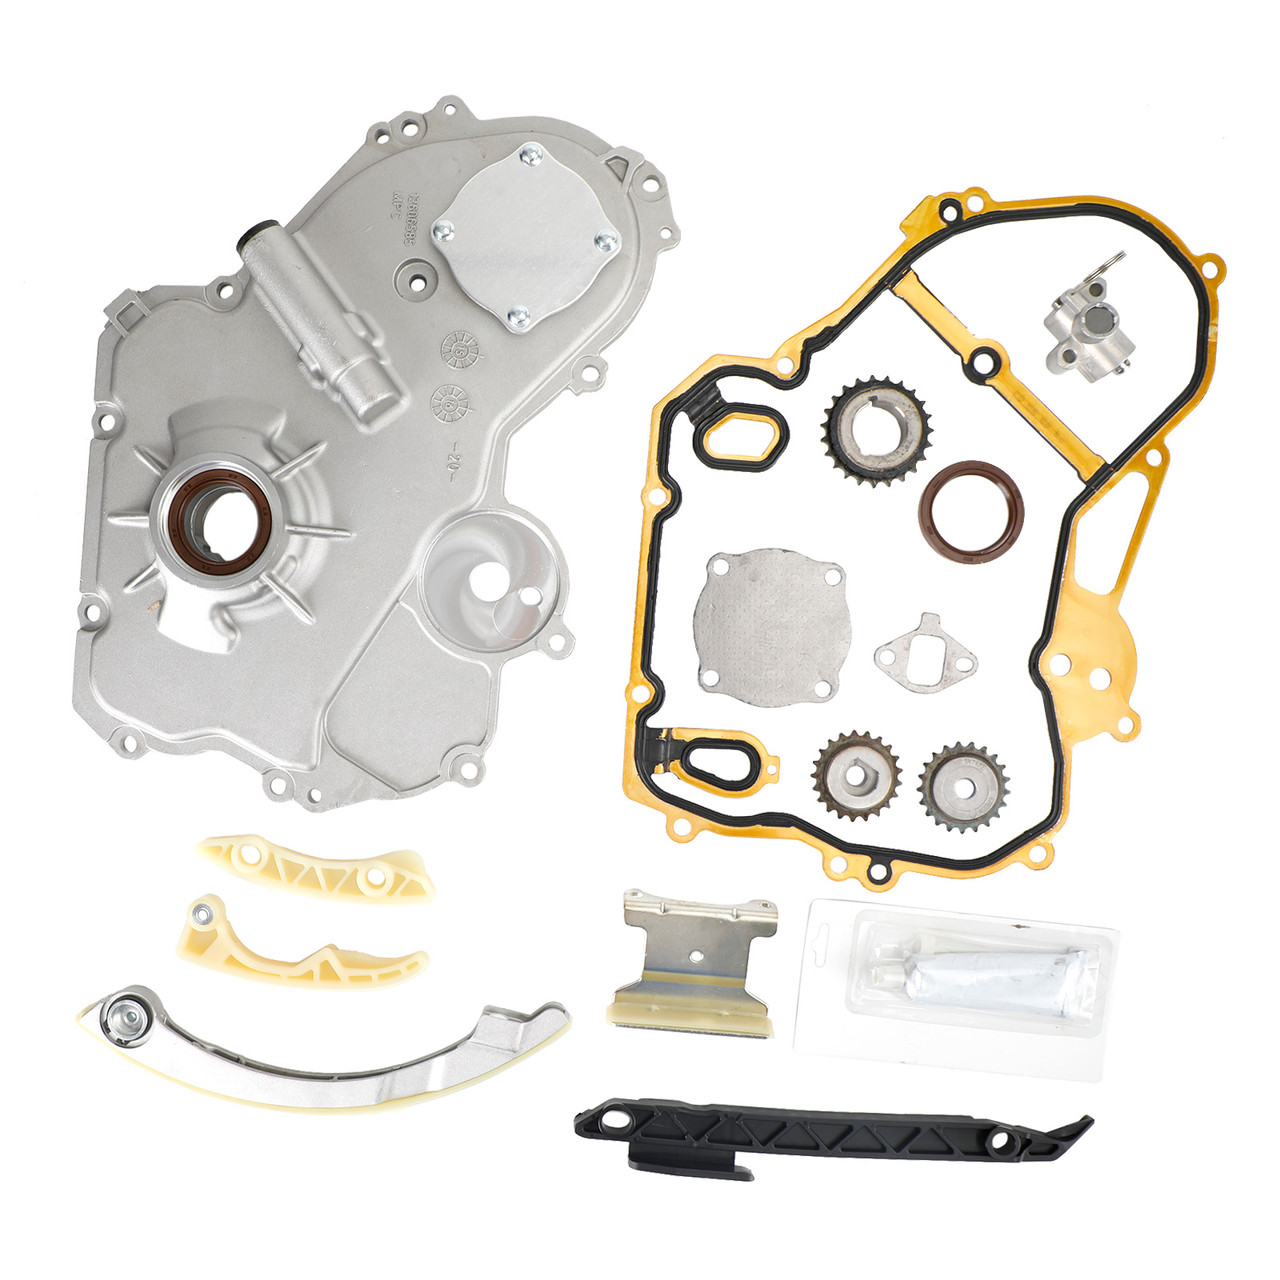 2010 CHEVROLET EQUINOX 2.4L Timing Chain Kit Oil Pump Selenoid Actuator Gear Cover Kit